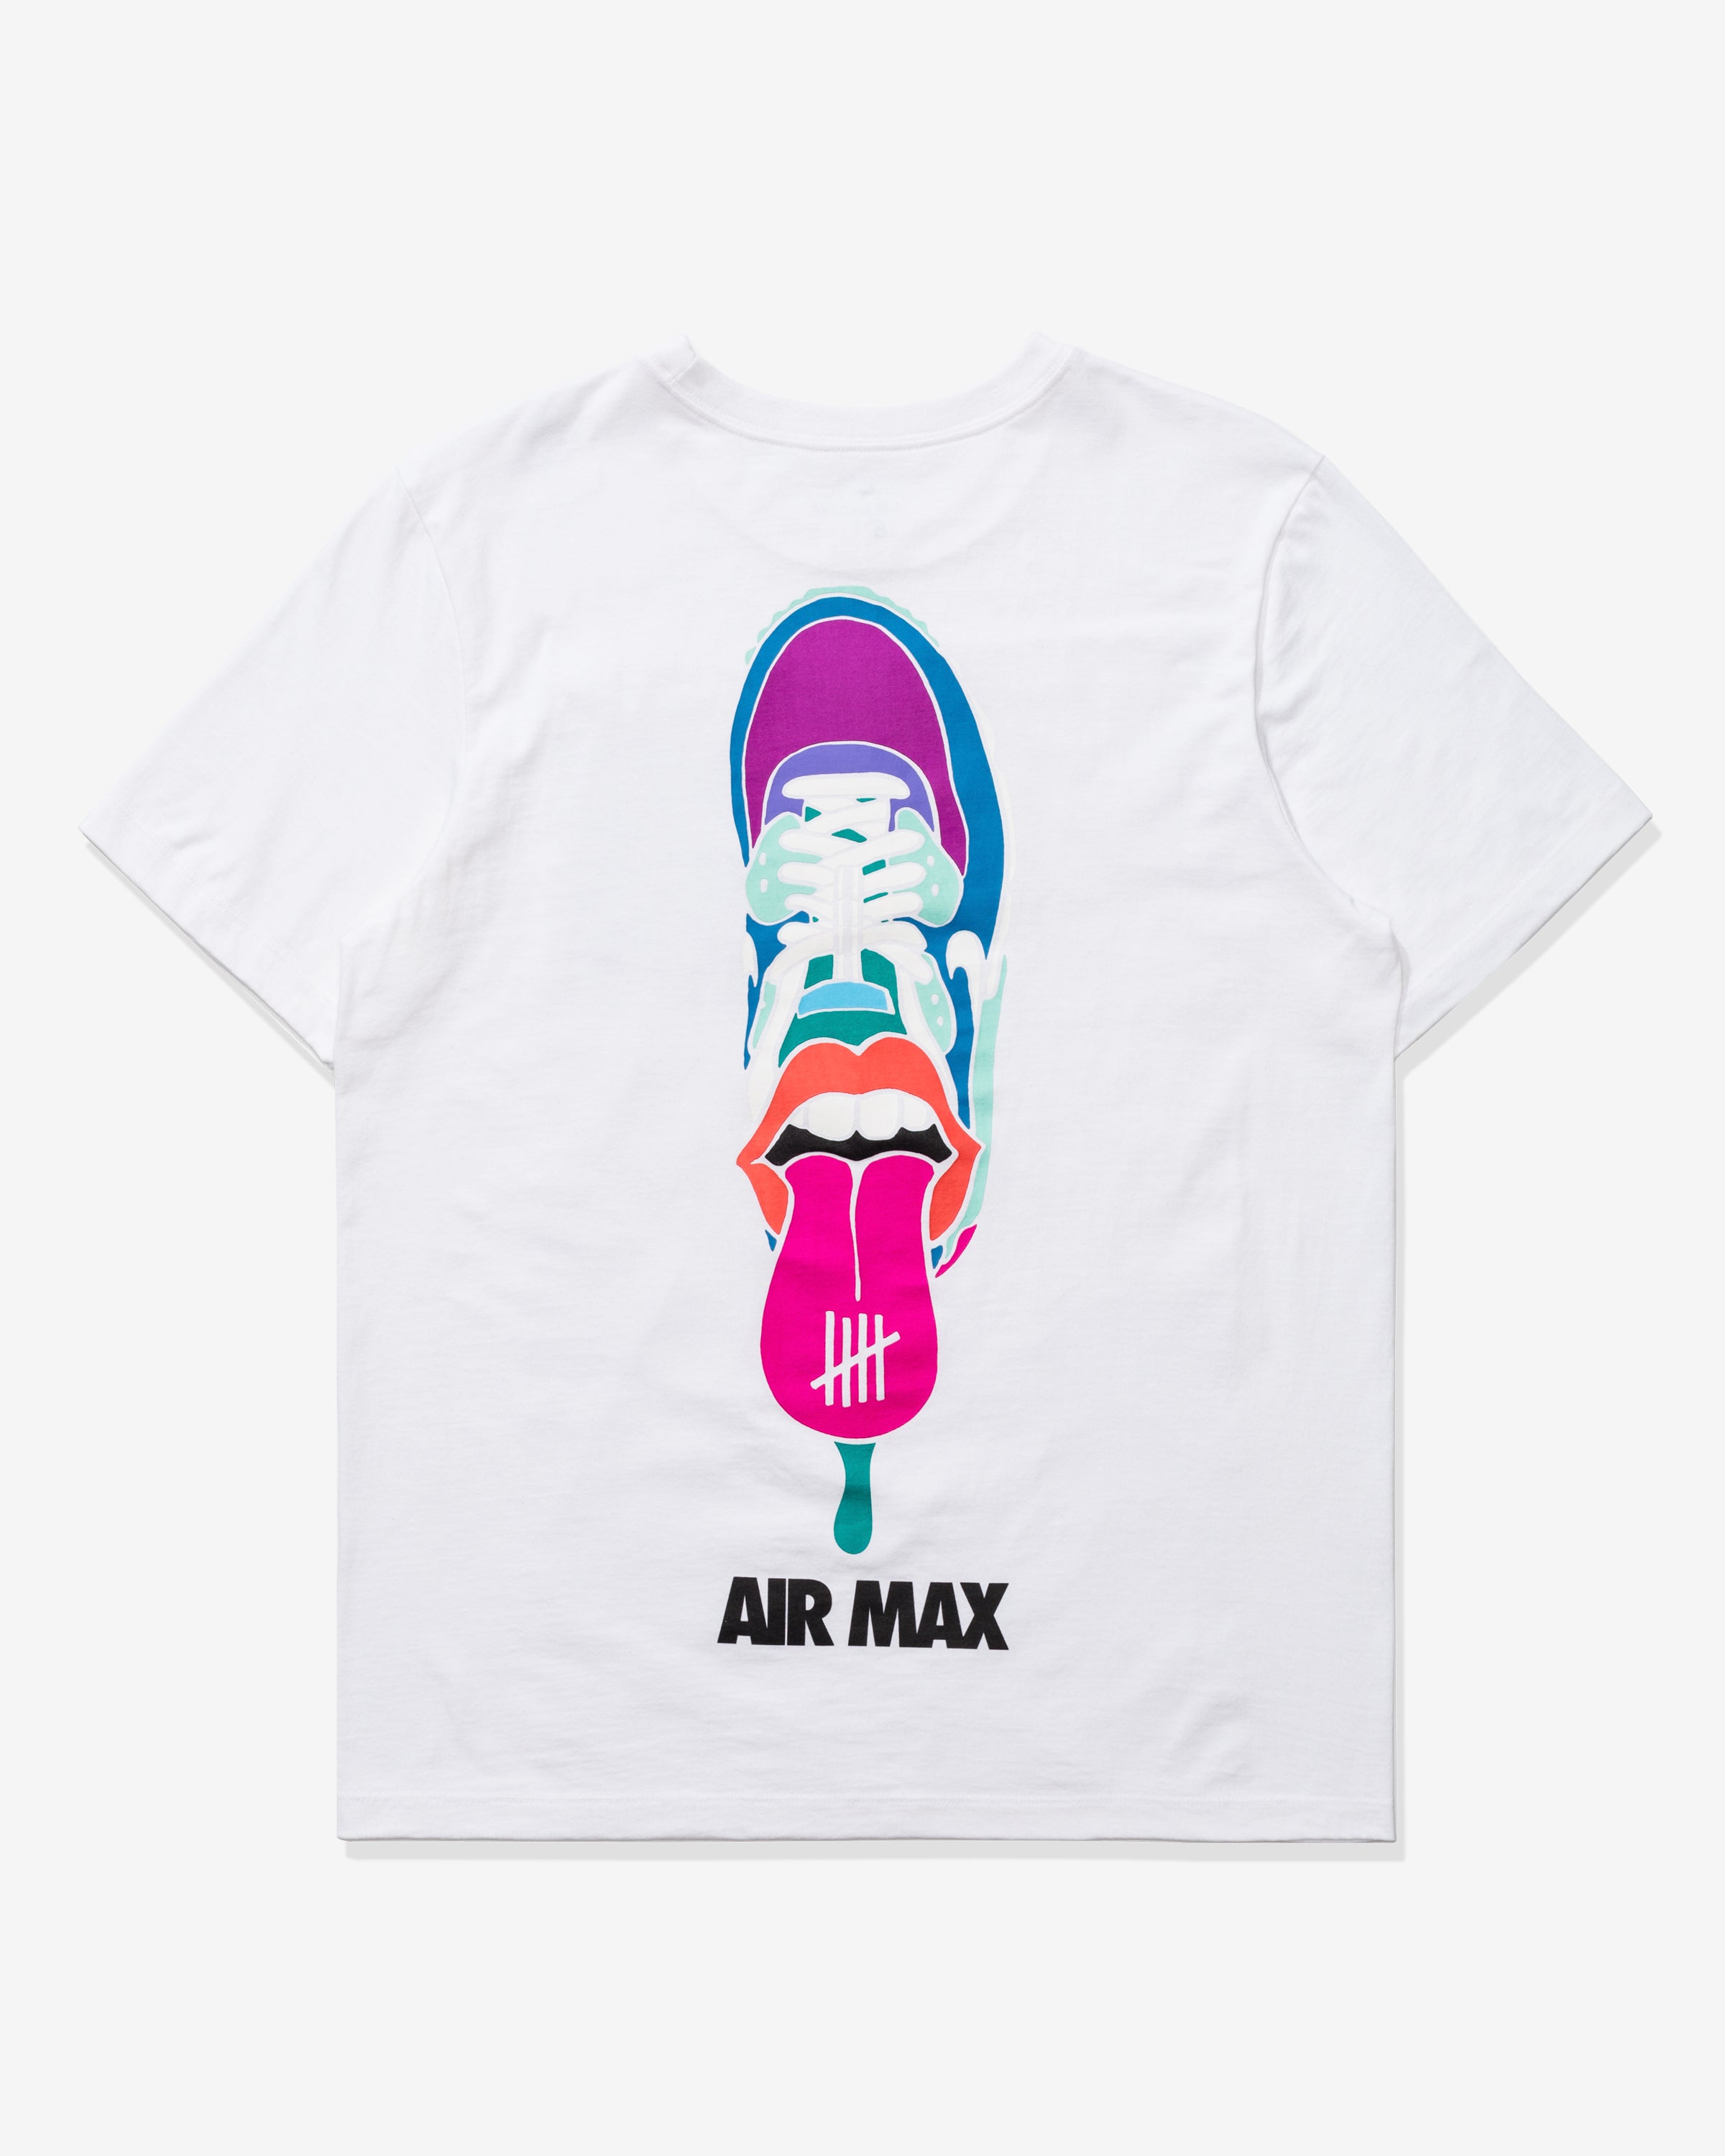 air max 90 shirt